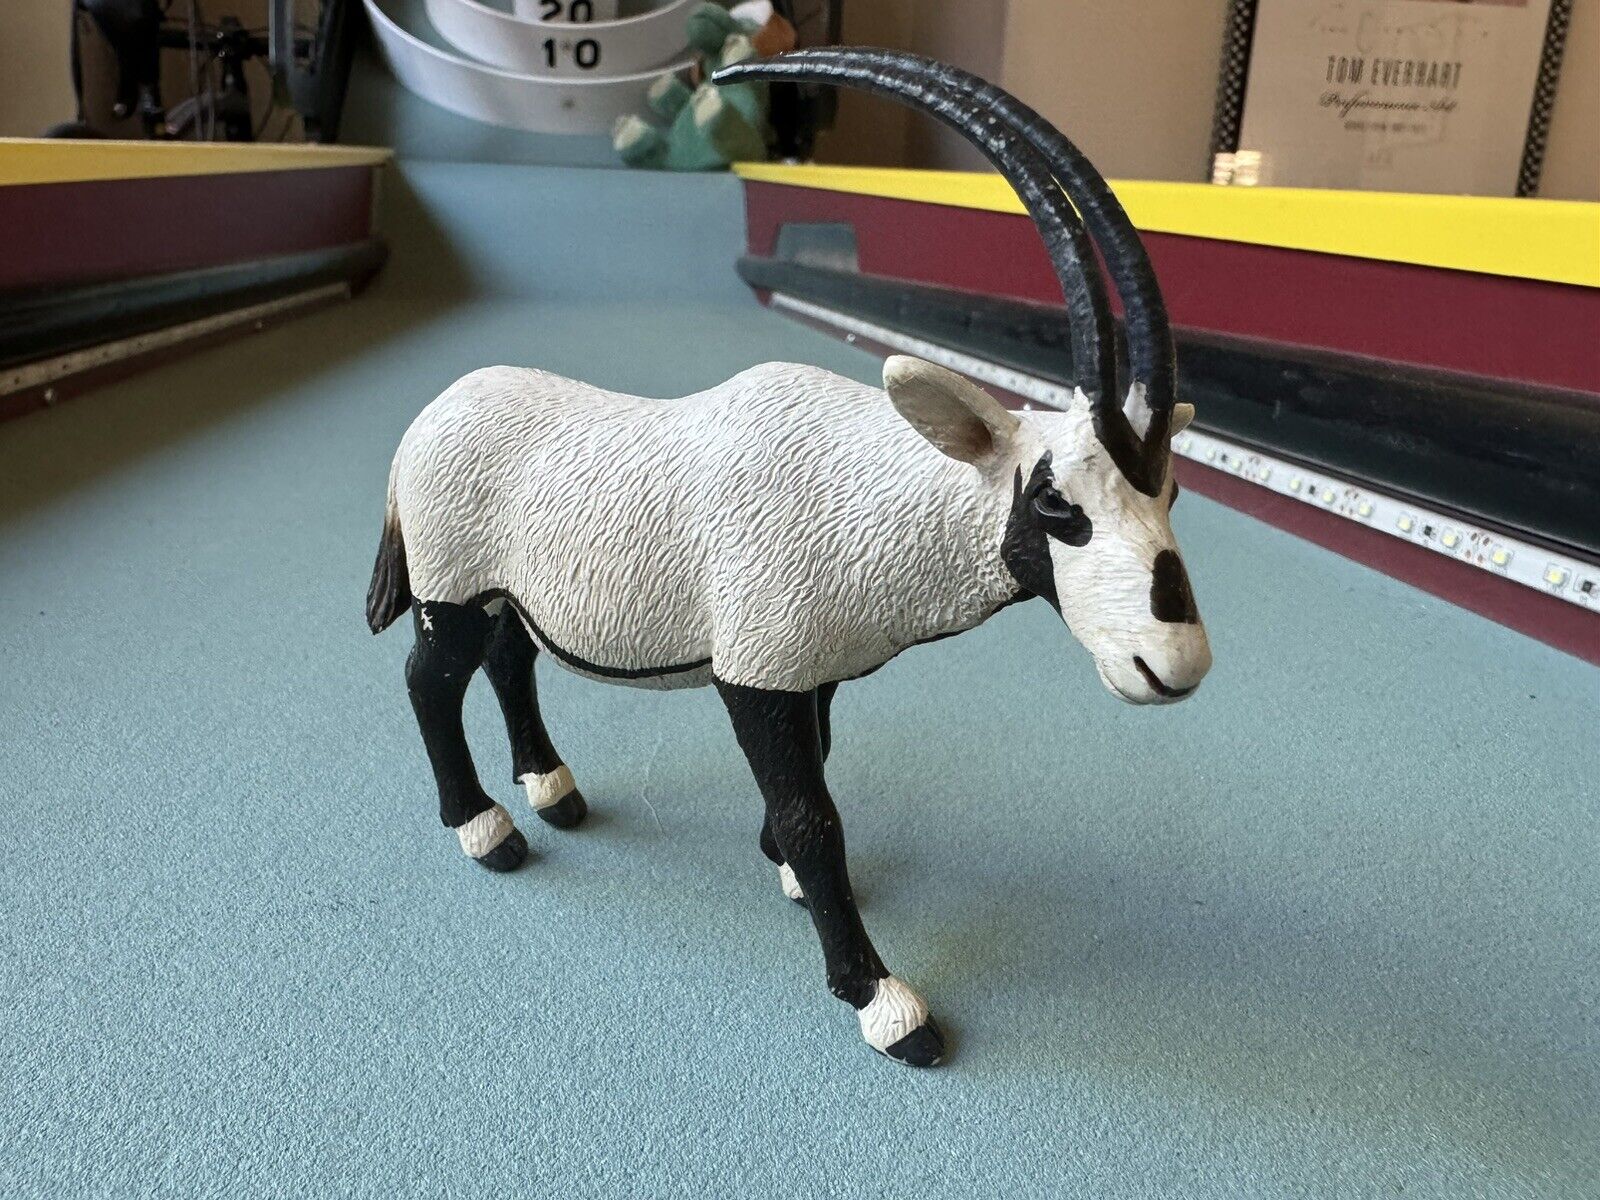 Safari Ltd ARABIAN ORYX Antelope Wildlife Animal Figure 2006 Safari Figurine Toy